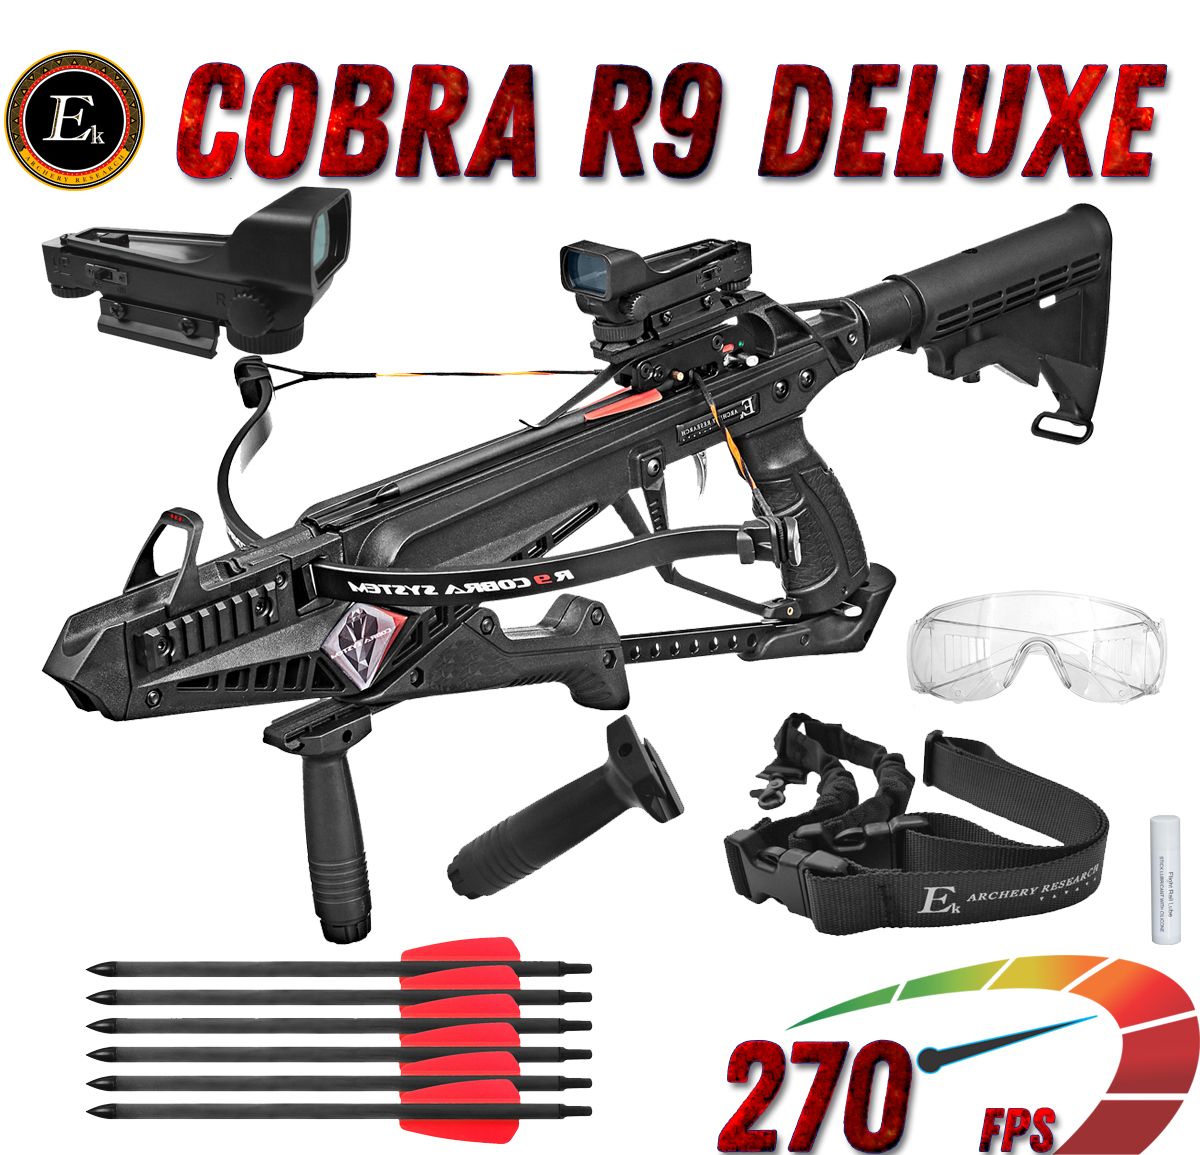 Ek cobra system r9. Арбалет Ek Archery Cobra System r9. Арбалет Кобра r9 Делюкс. Cobra System r9 Deluxe.